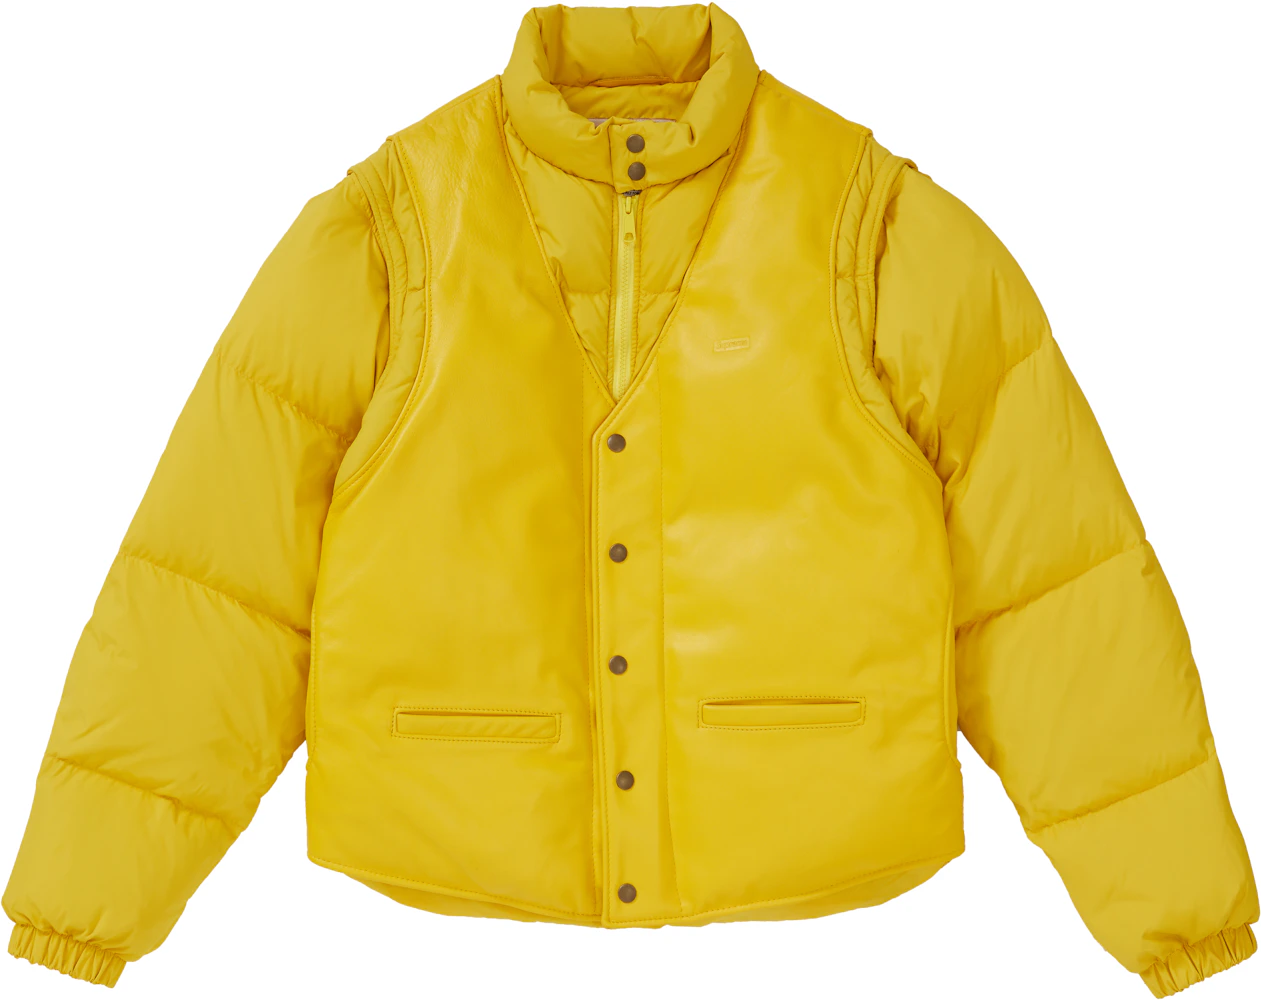 Supreme Schott Down Leather Vest Puffy Jacket Yellow - FW18 - US